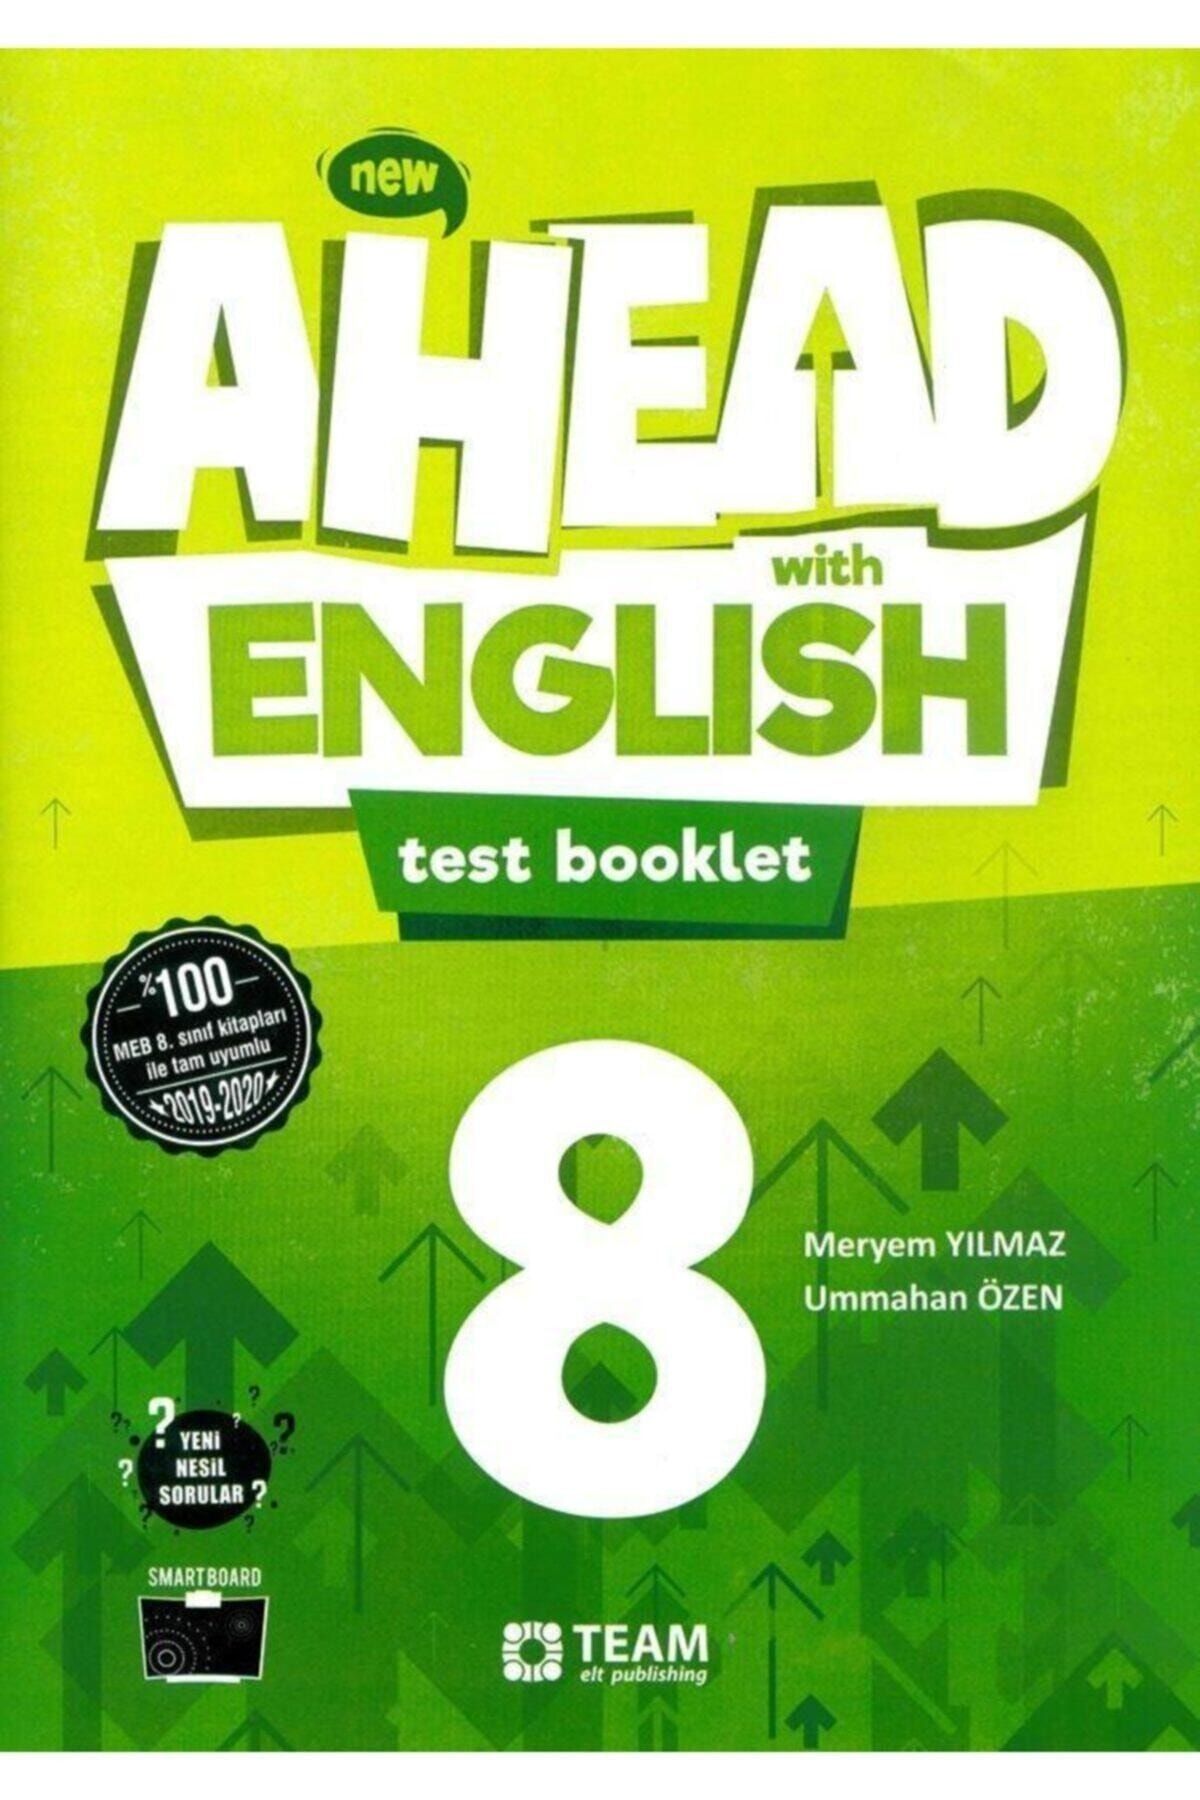 English test book. English Vocabulary books. Ahead with English. Vocabulary книга. English Practice.